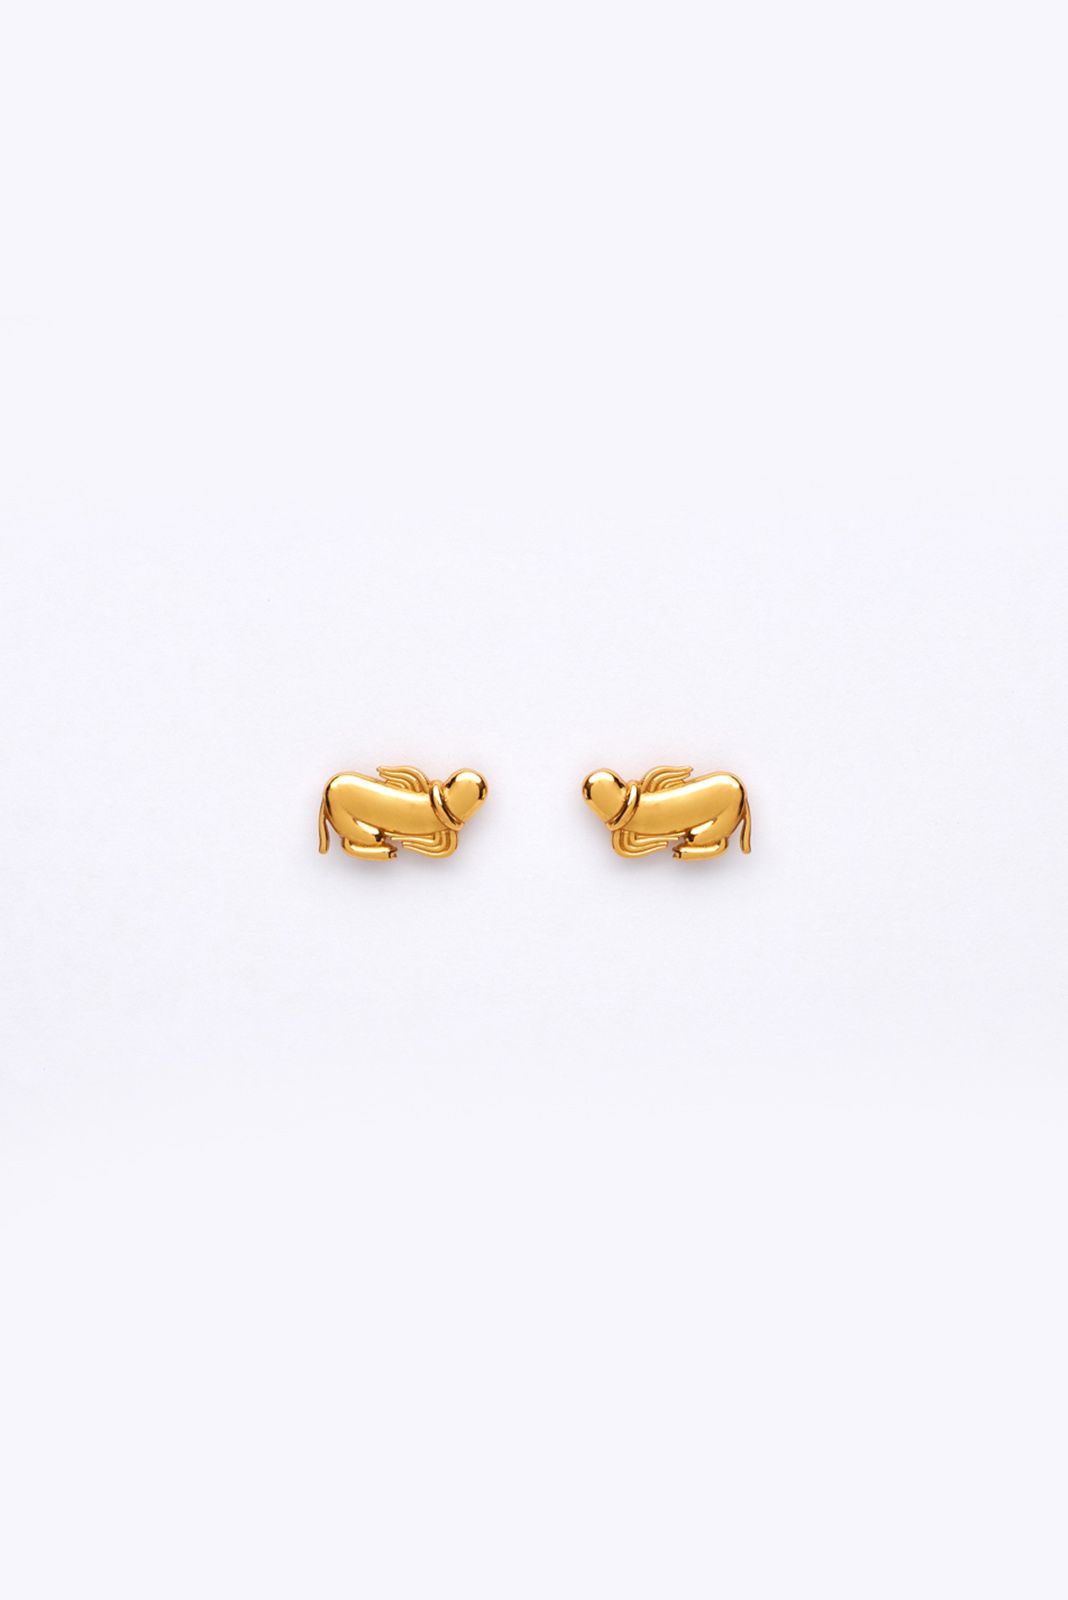 Gold plated phalic earrings